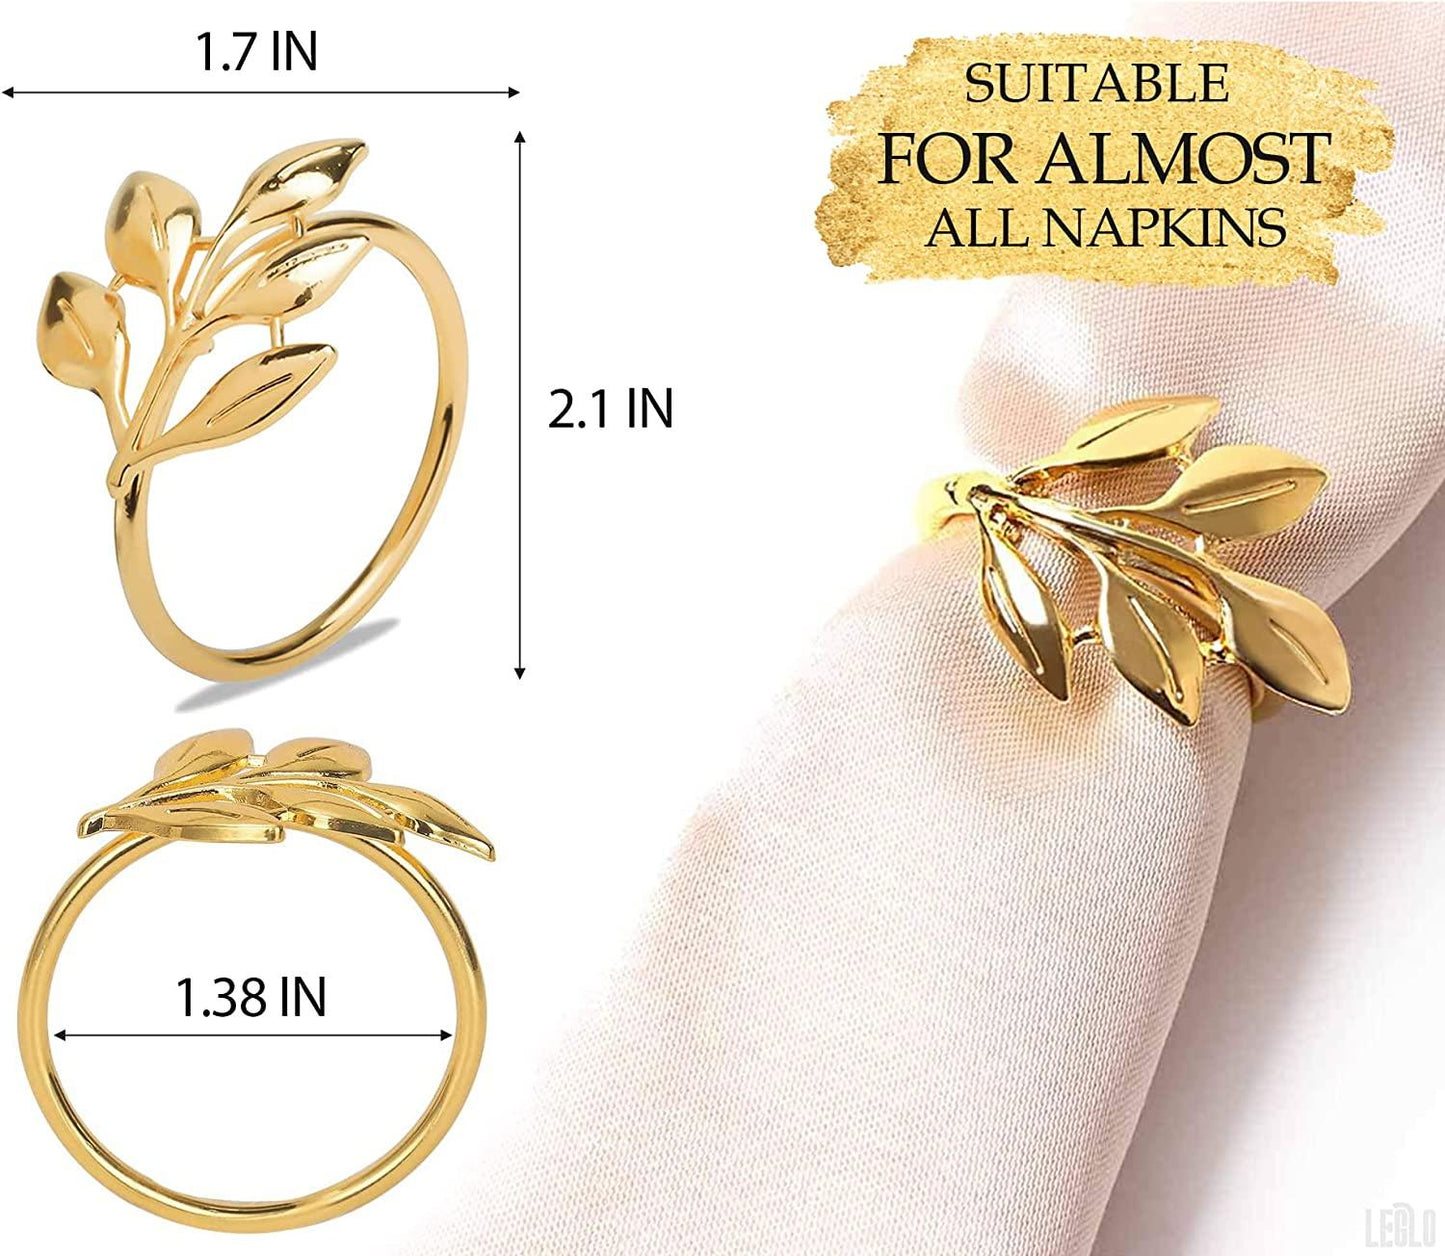 20Pcs Gold Leaf Napkin Rings - Elegant Gold Napkin Ring for Wedding Table Napkins - If you say i do